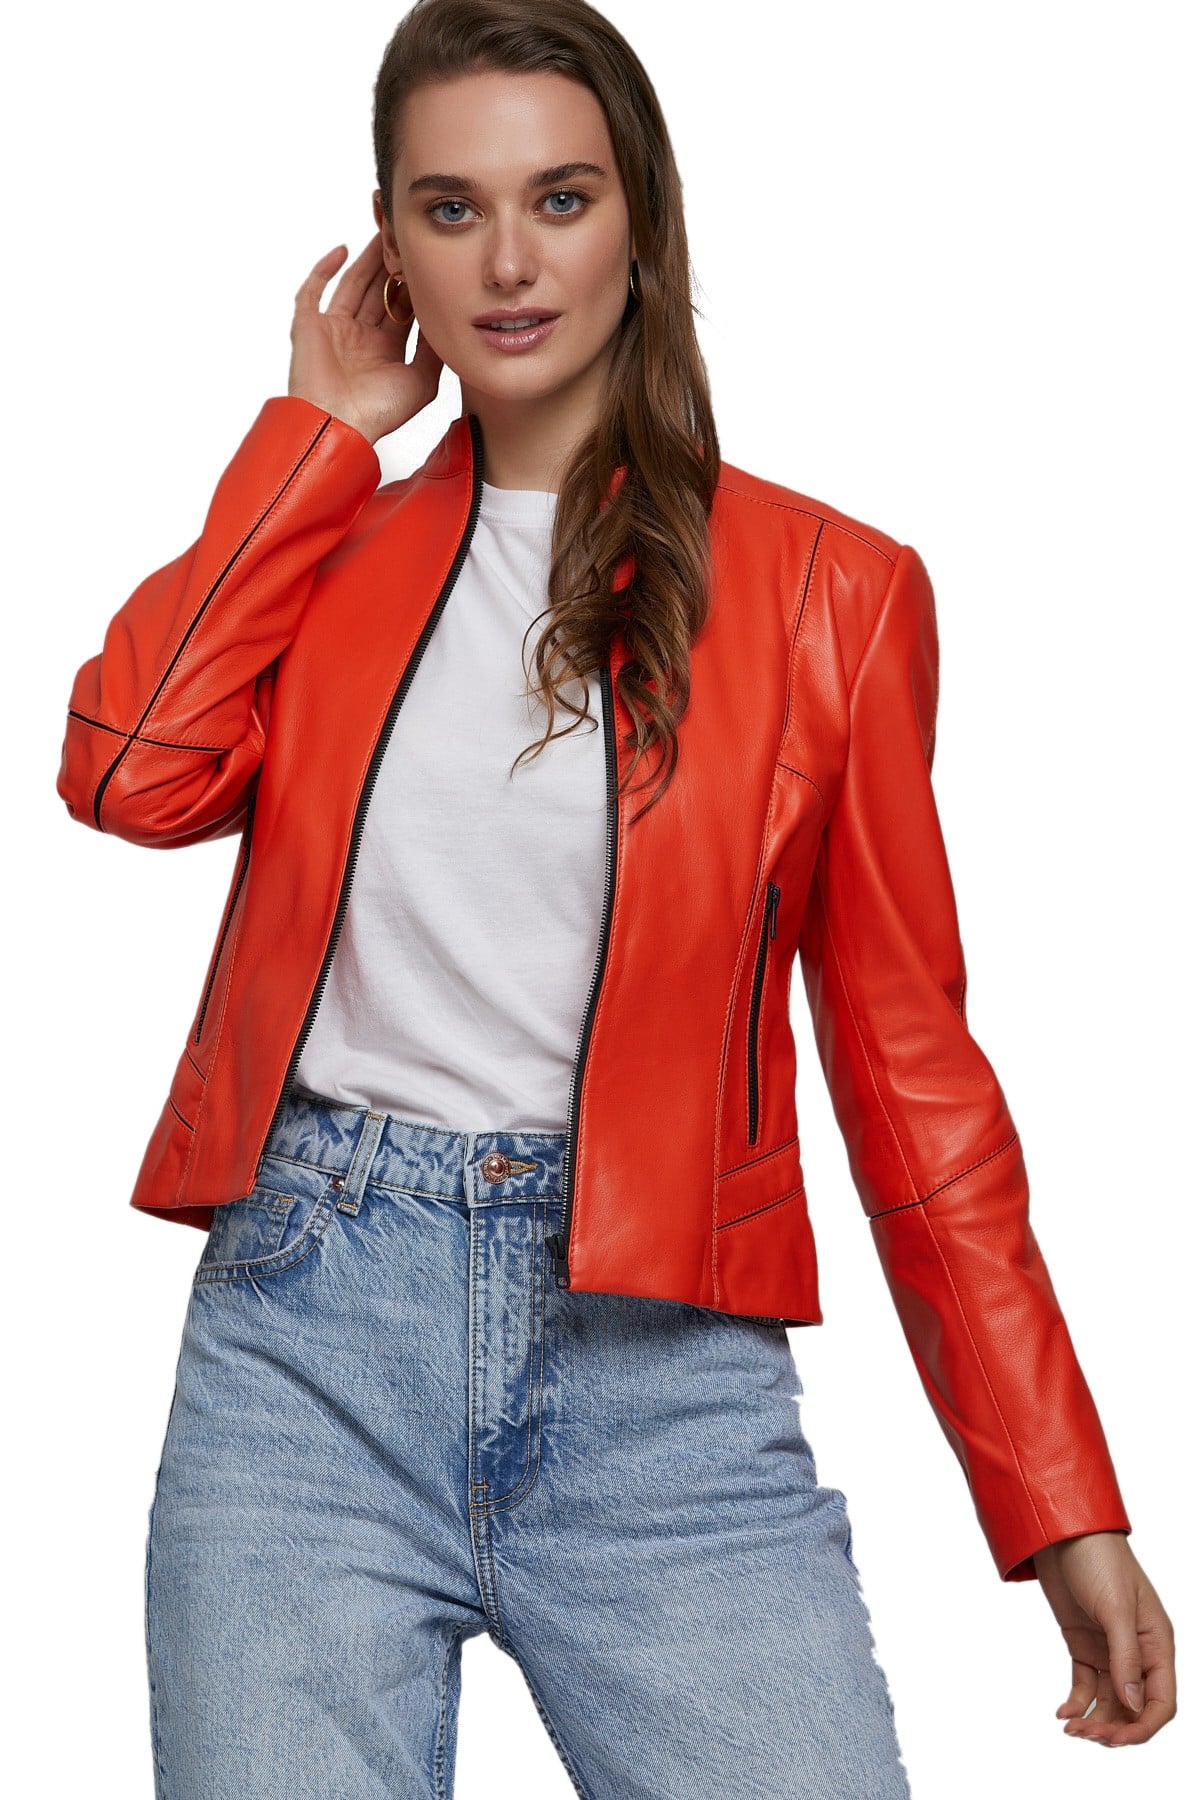 Genuine Orange Leather Jacket for Women in Wisconsin